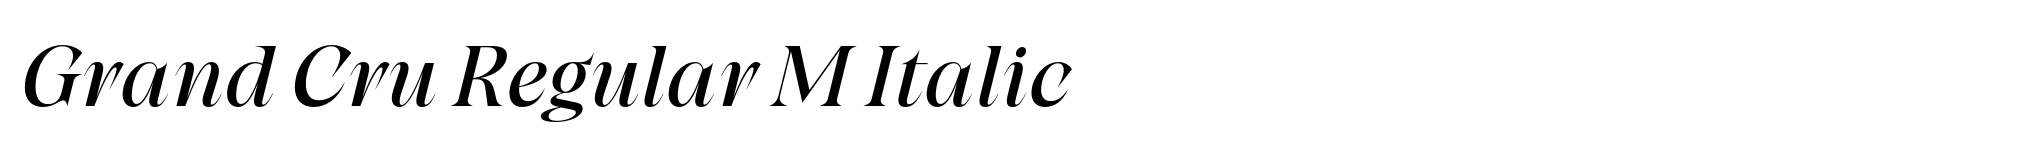 Grand Cru Regular M Italic image